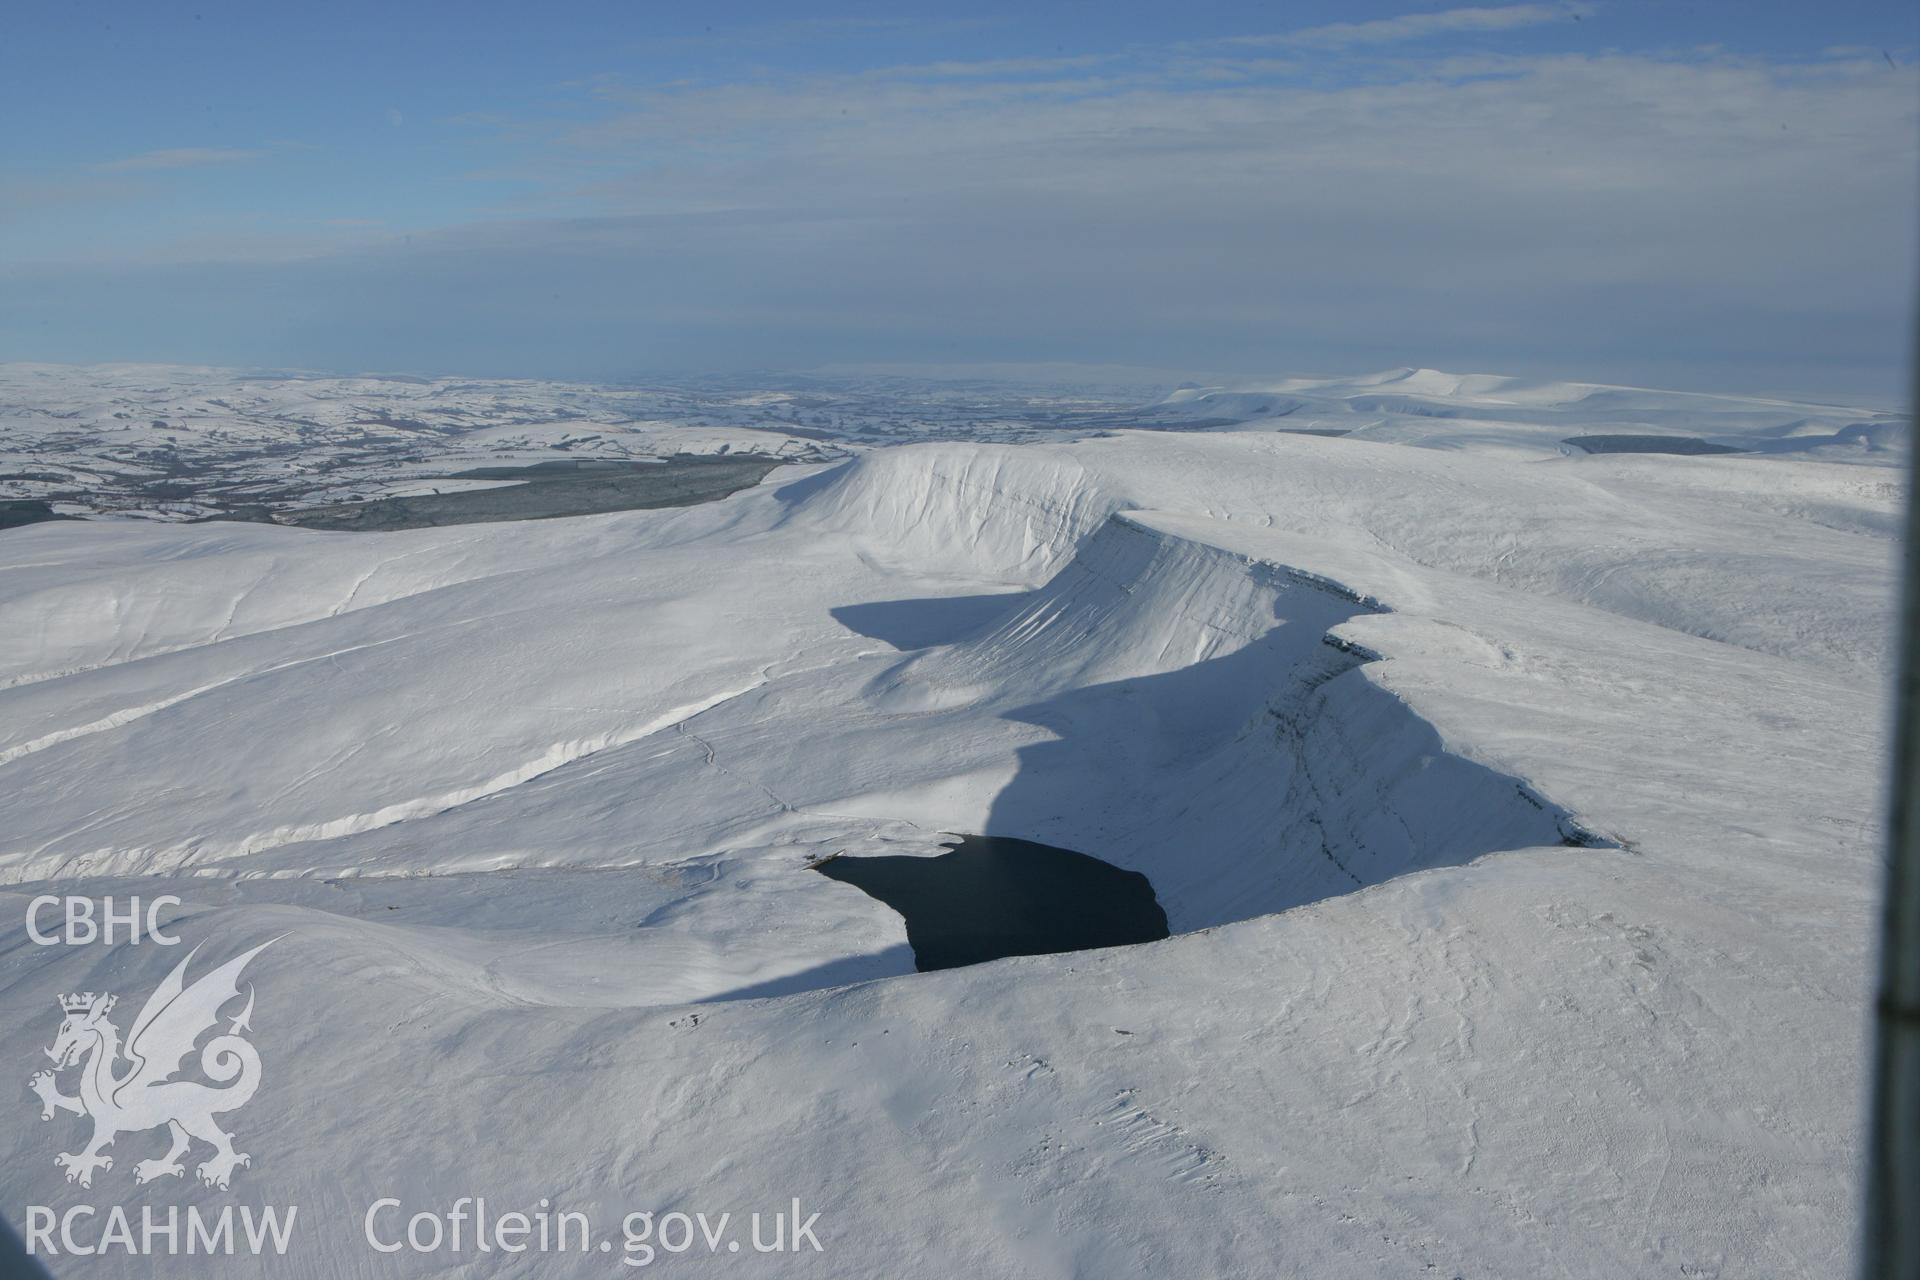 RCAHMW colour oblique photograph of Llyn y Fan Fach, winter landscape. Taken by Toby Driver on 06/02/2009.